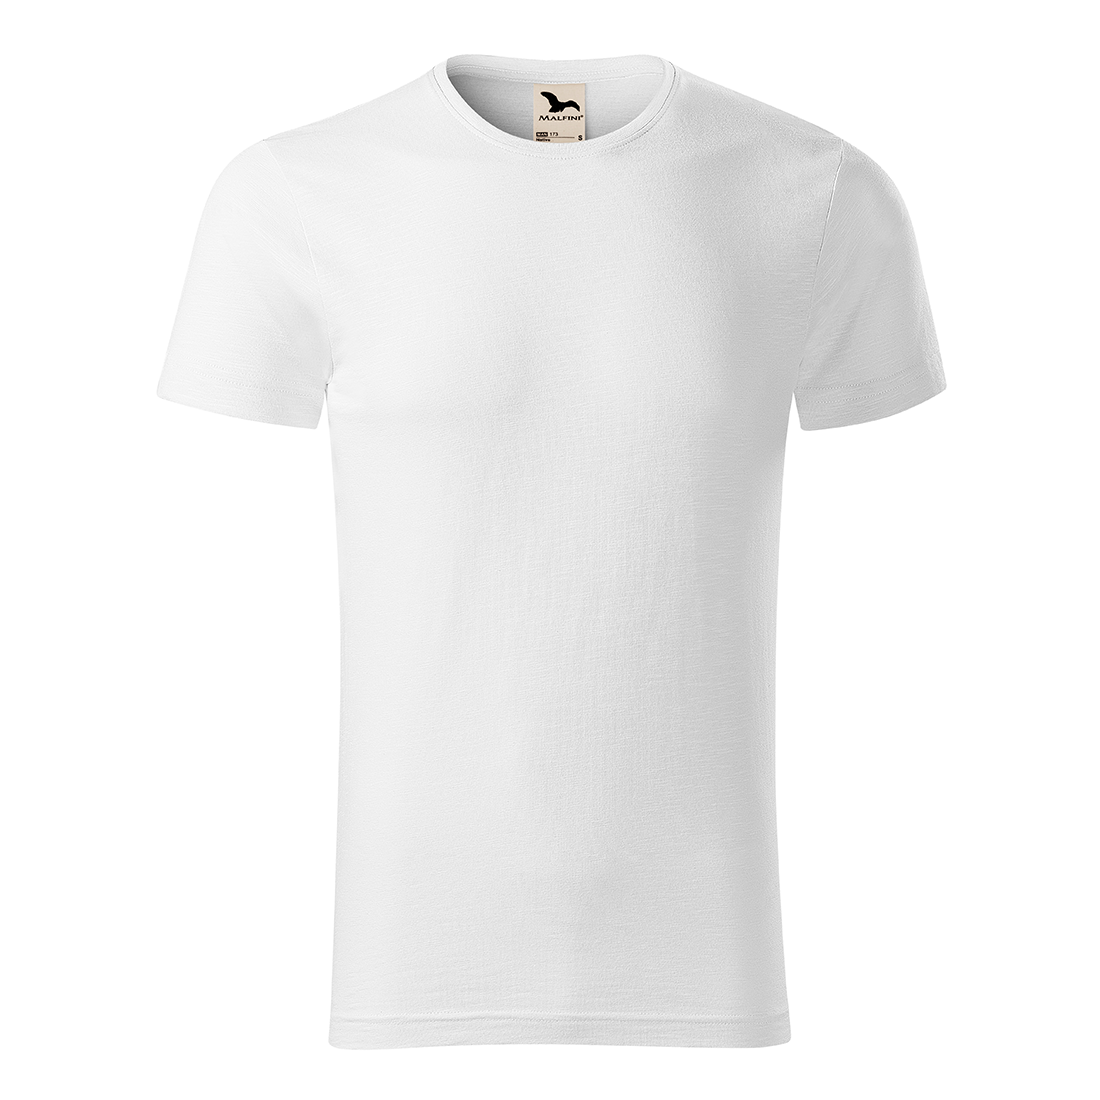 Camiseta de hombre NATIVE de algodón orgánico - Ropa de protección